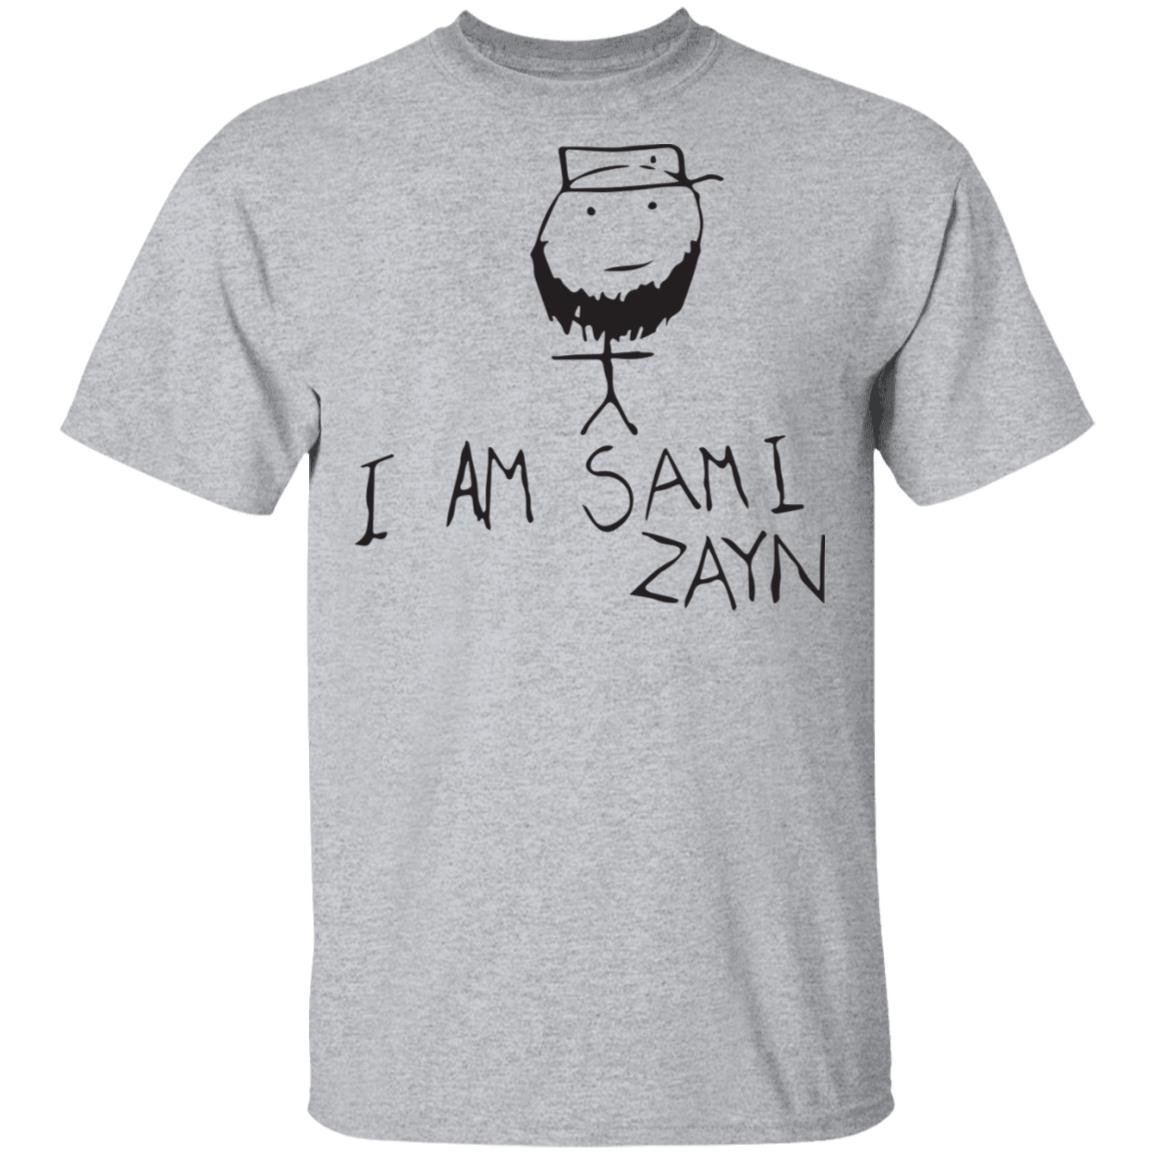 I Am Sami Zayn shirt - Rockatee